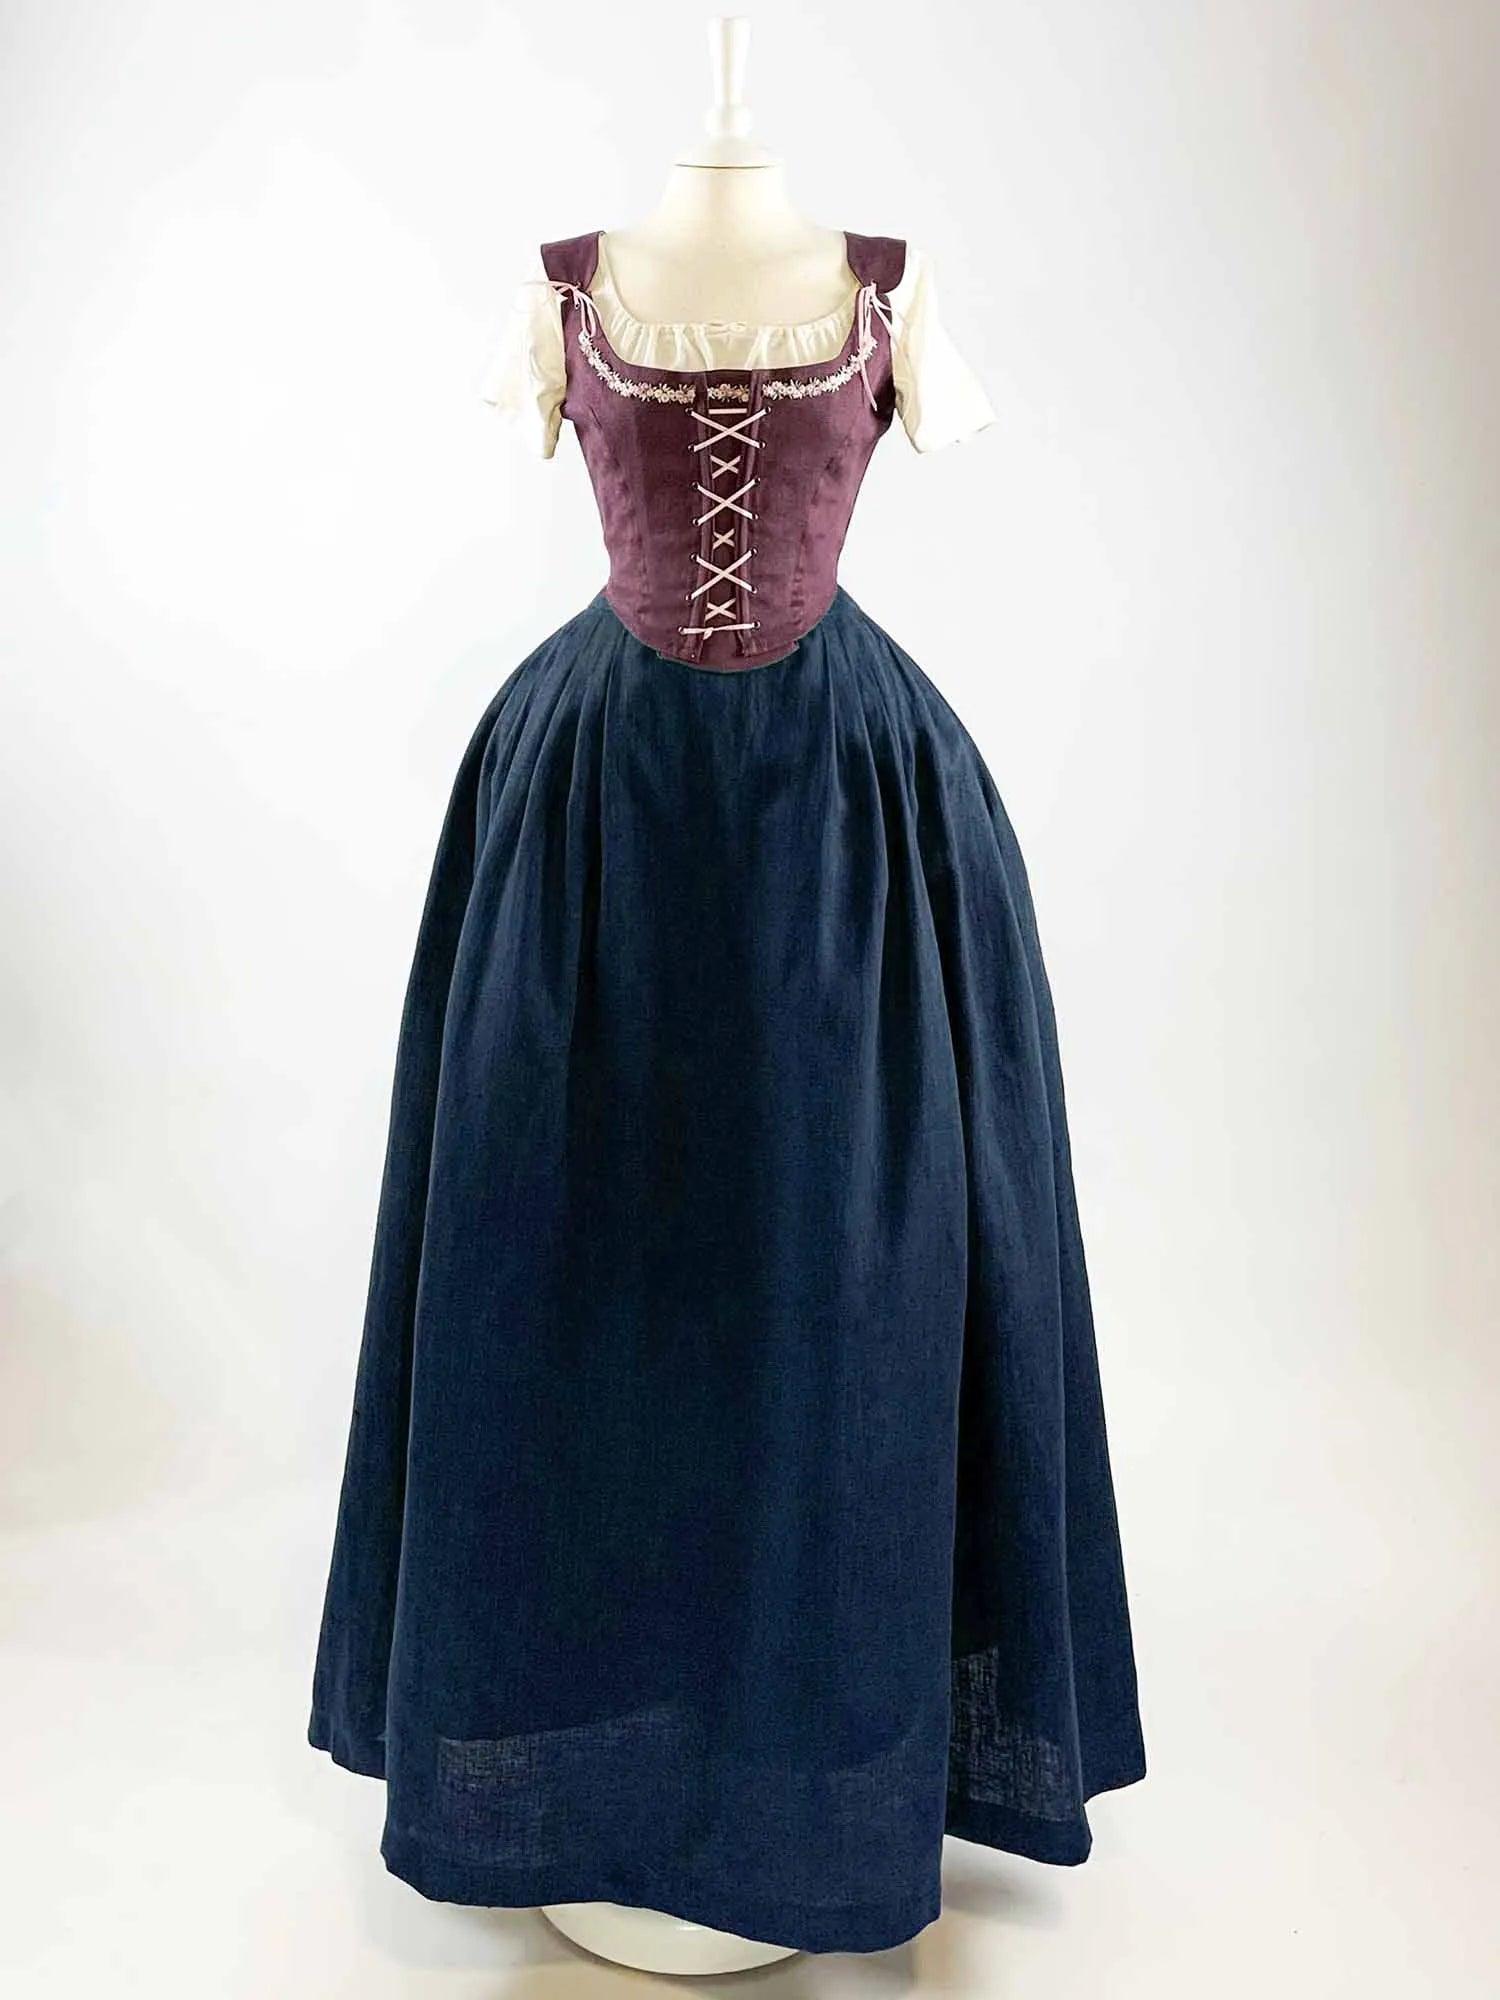 ISOLDE, Renaissance Costume in Purple & Navy Blue Linen - Atelier Serraspina - Costume Renaissance en Lin Violet et Bleu marine